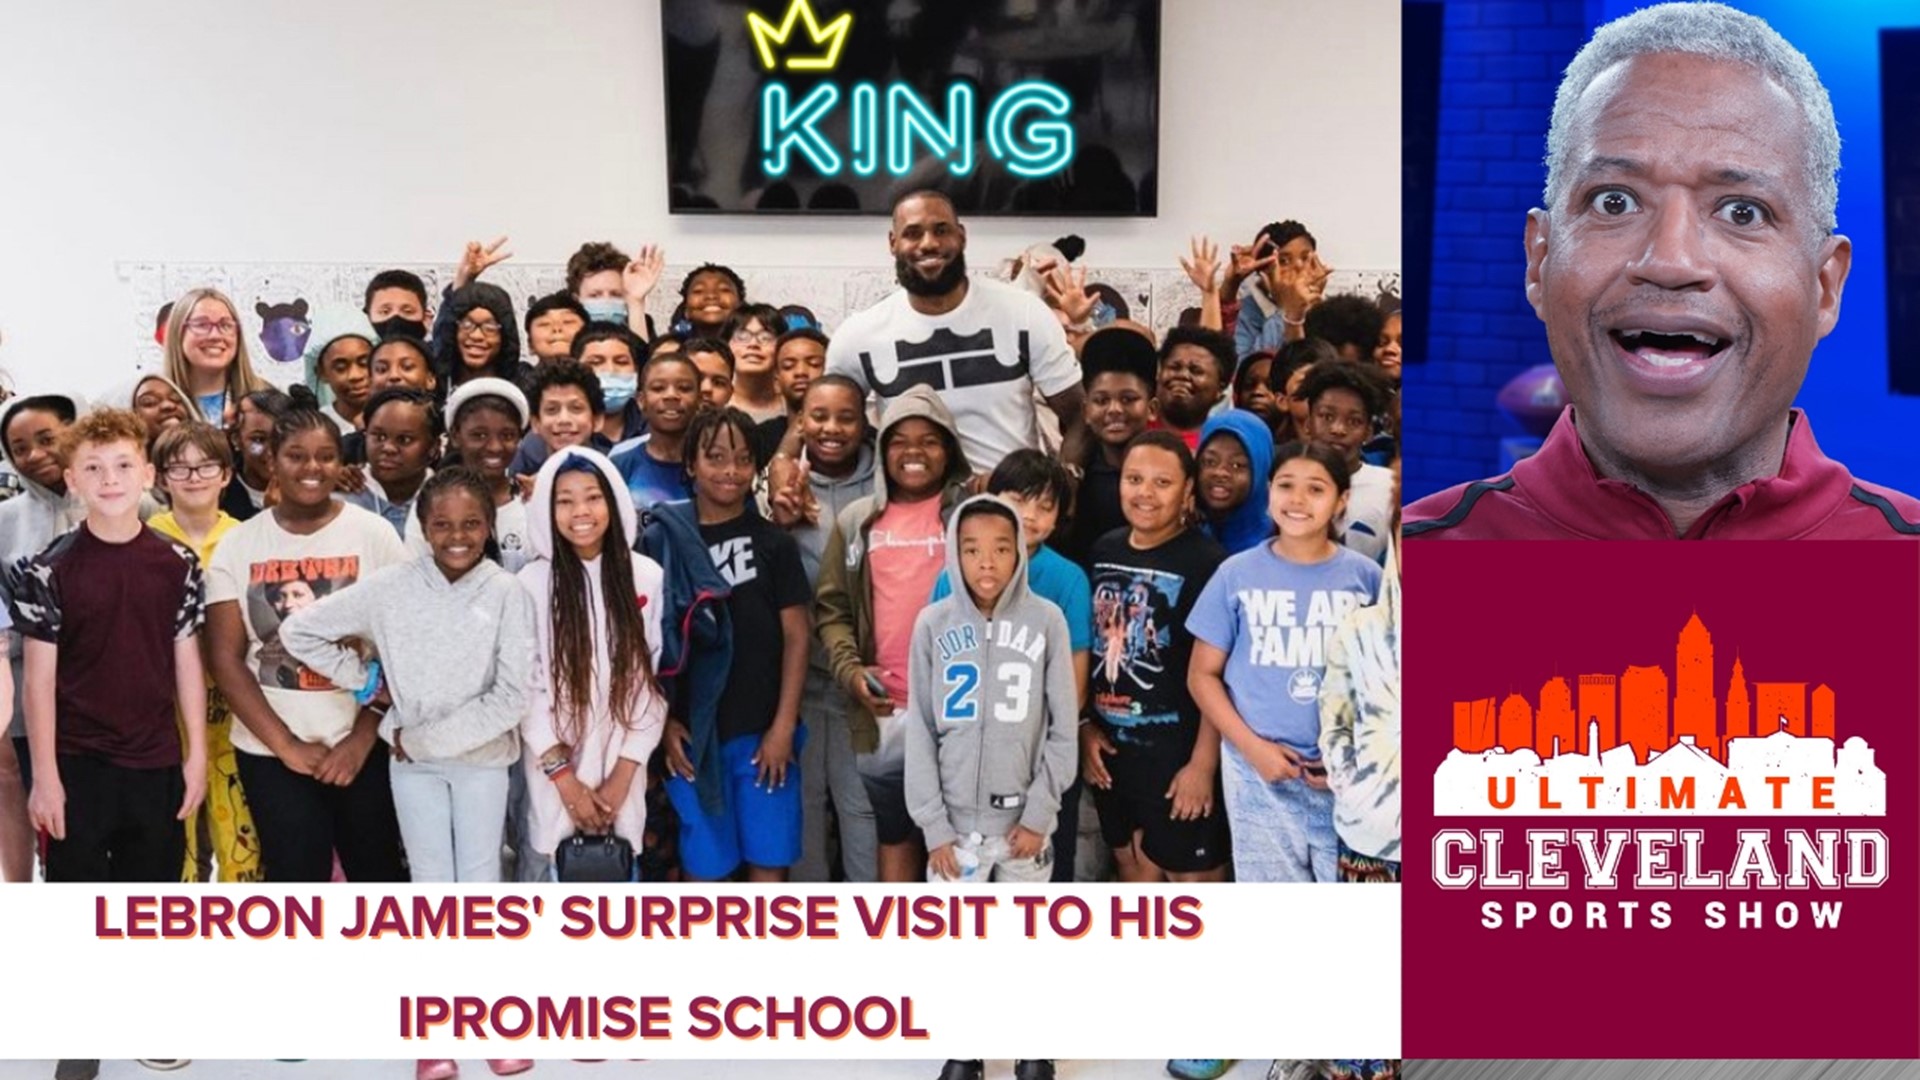 LeBron James surprises Ohio kids on their last day of school - CBS